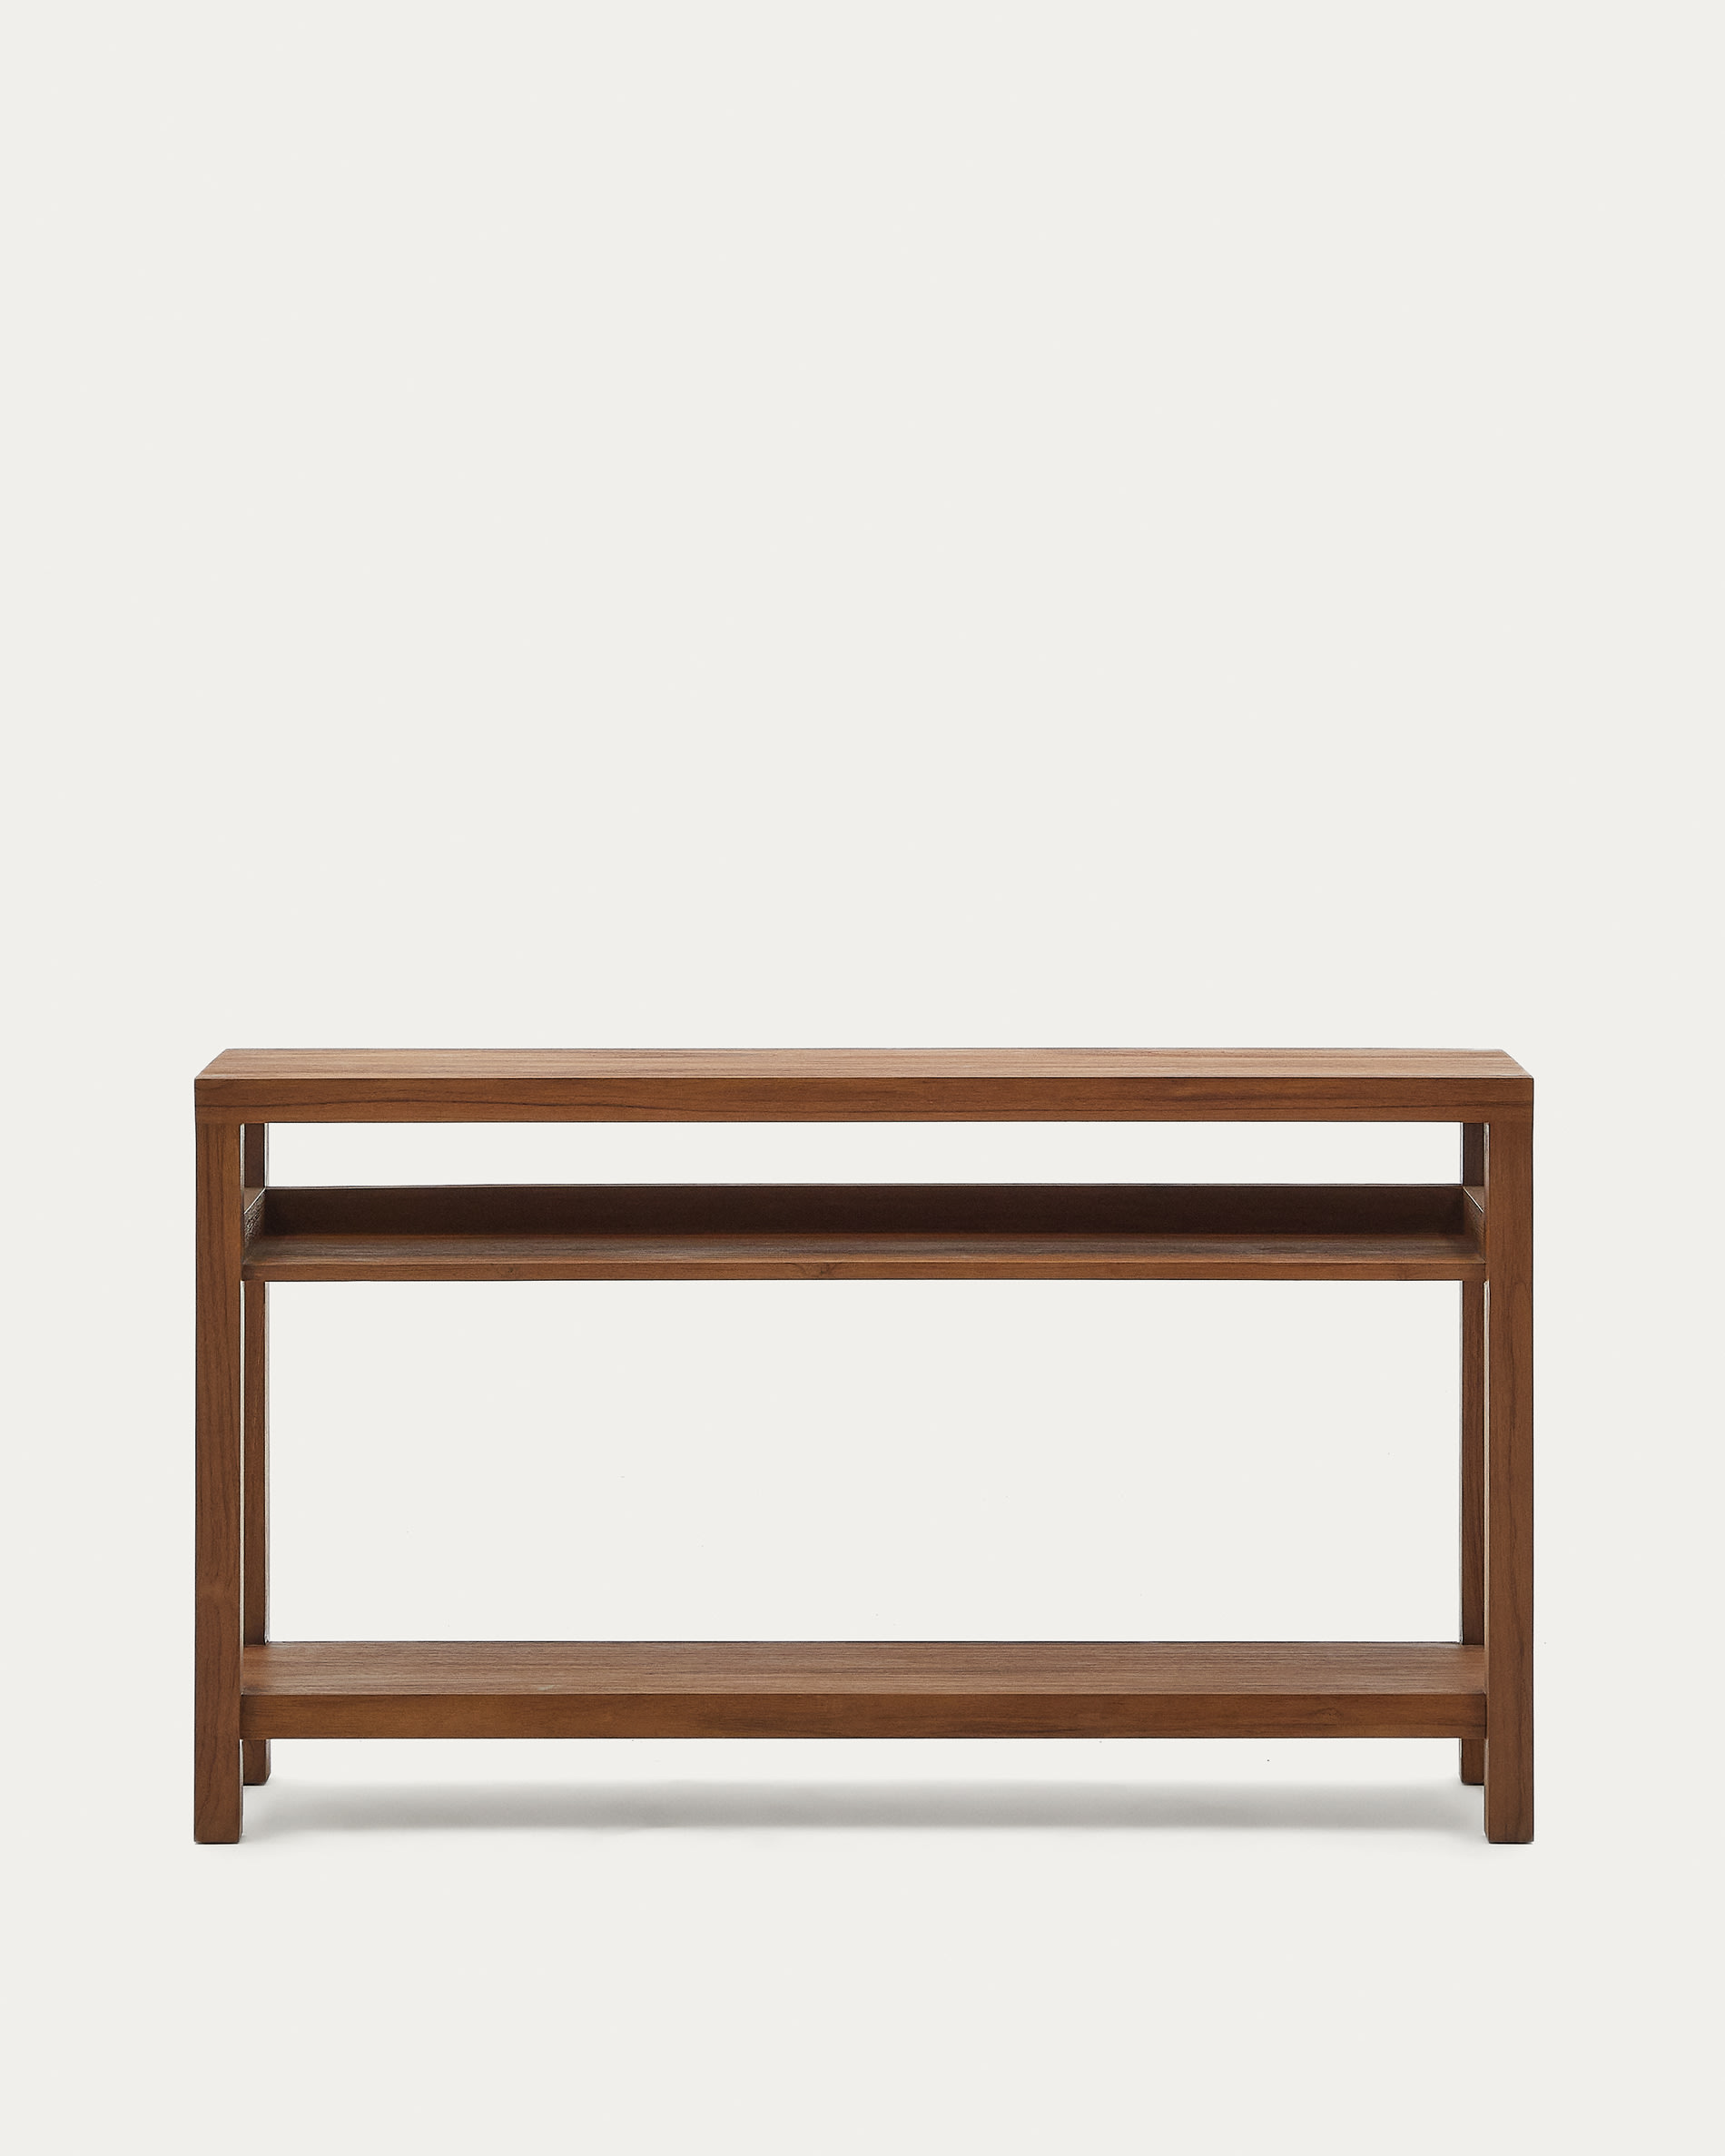 Sashi sideboard made in solid teak wood 140 x 80 cm